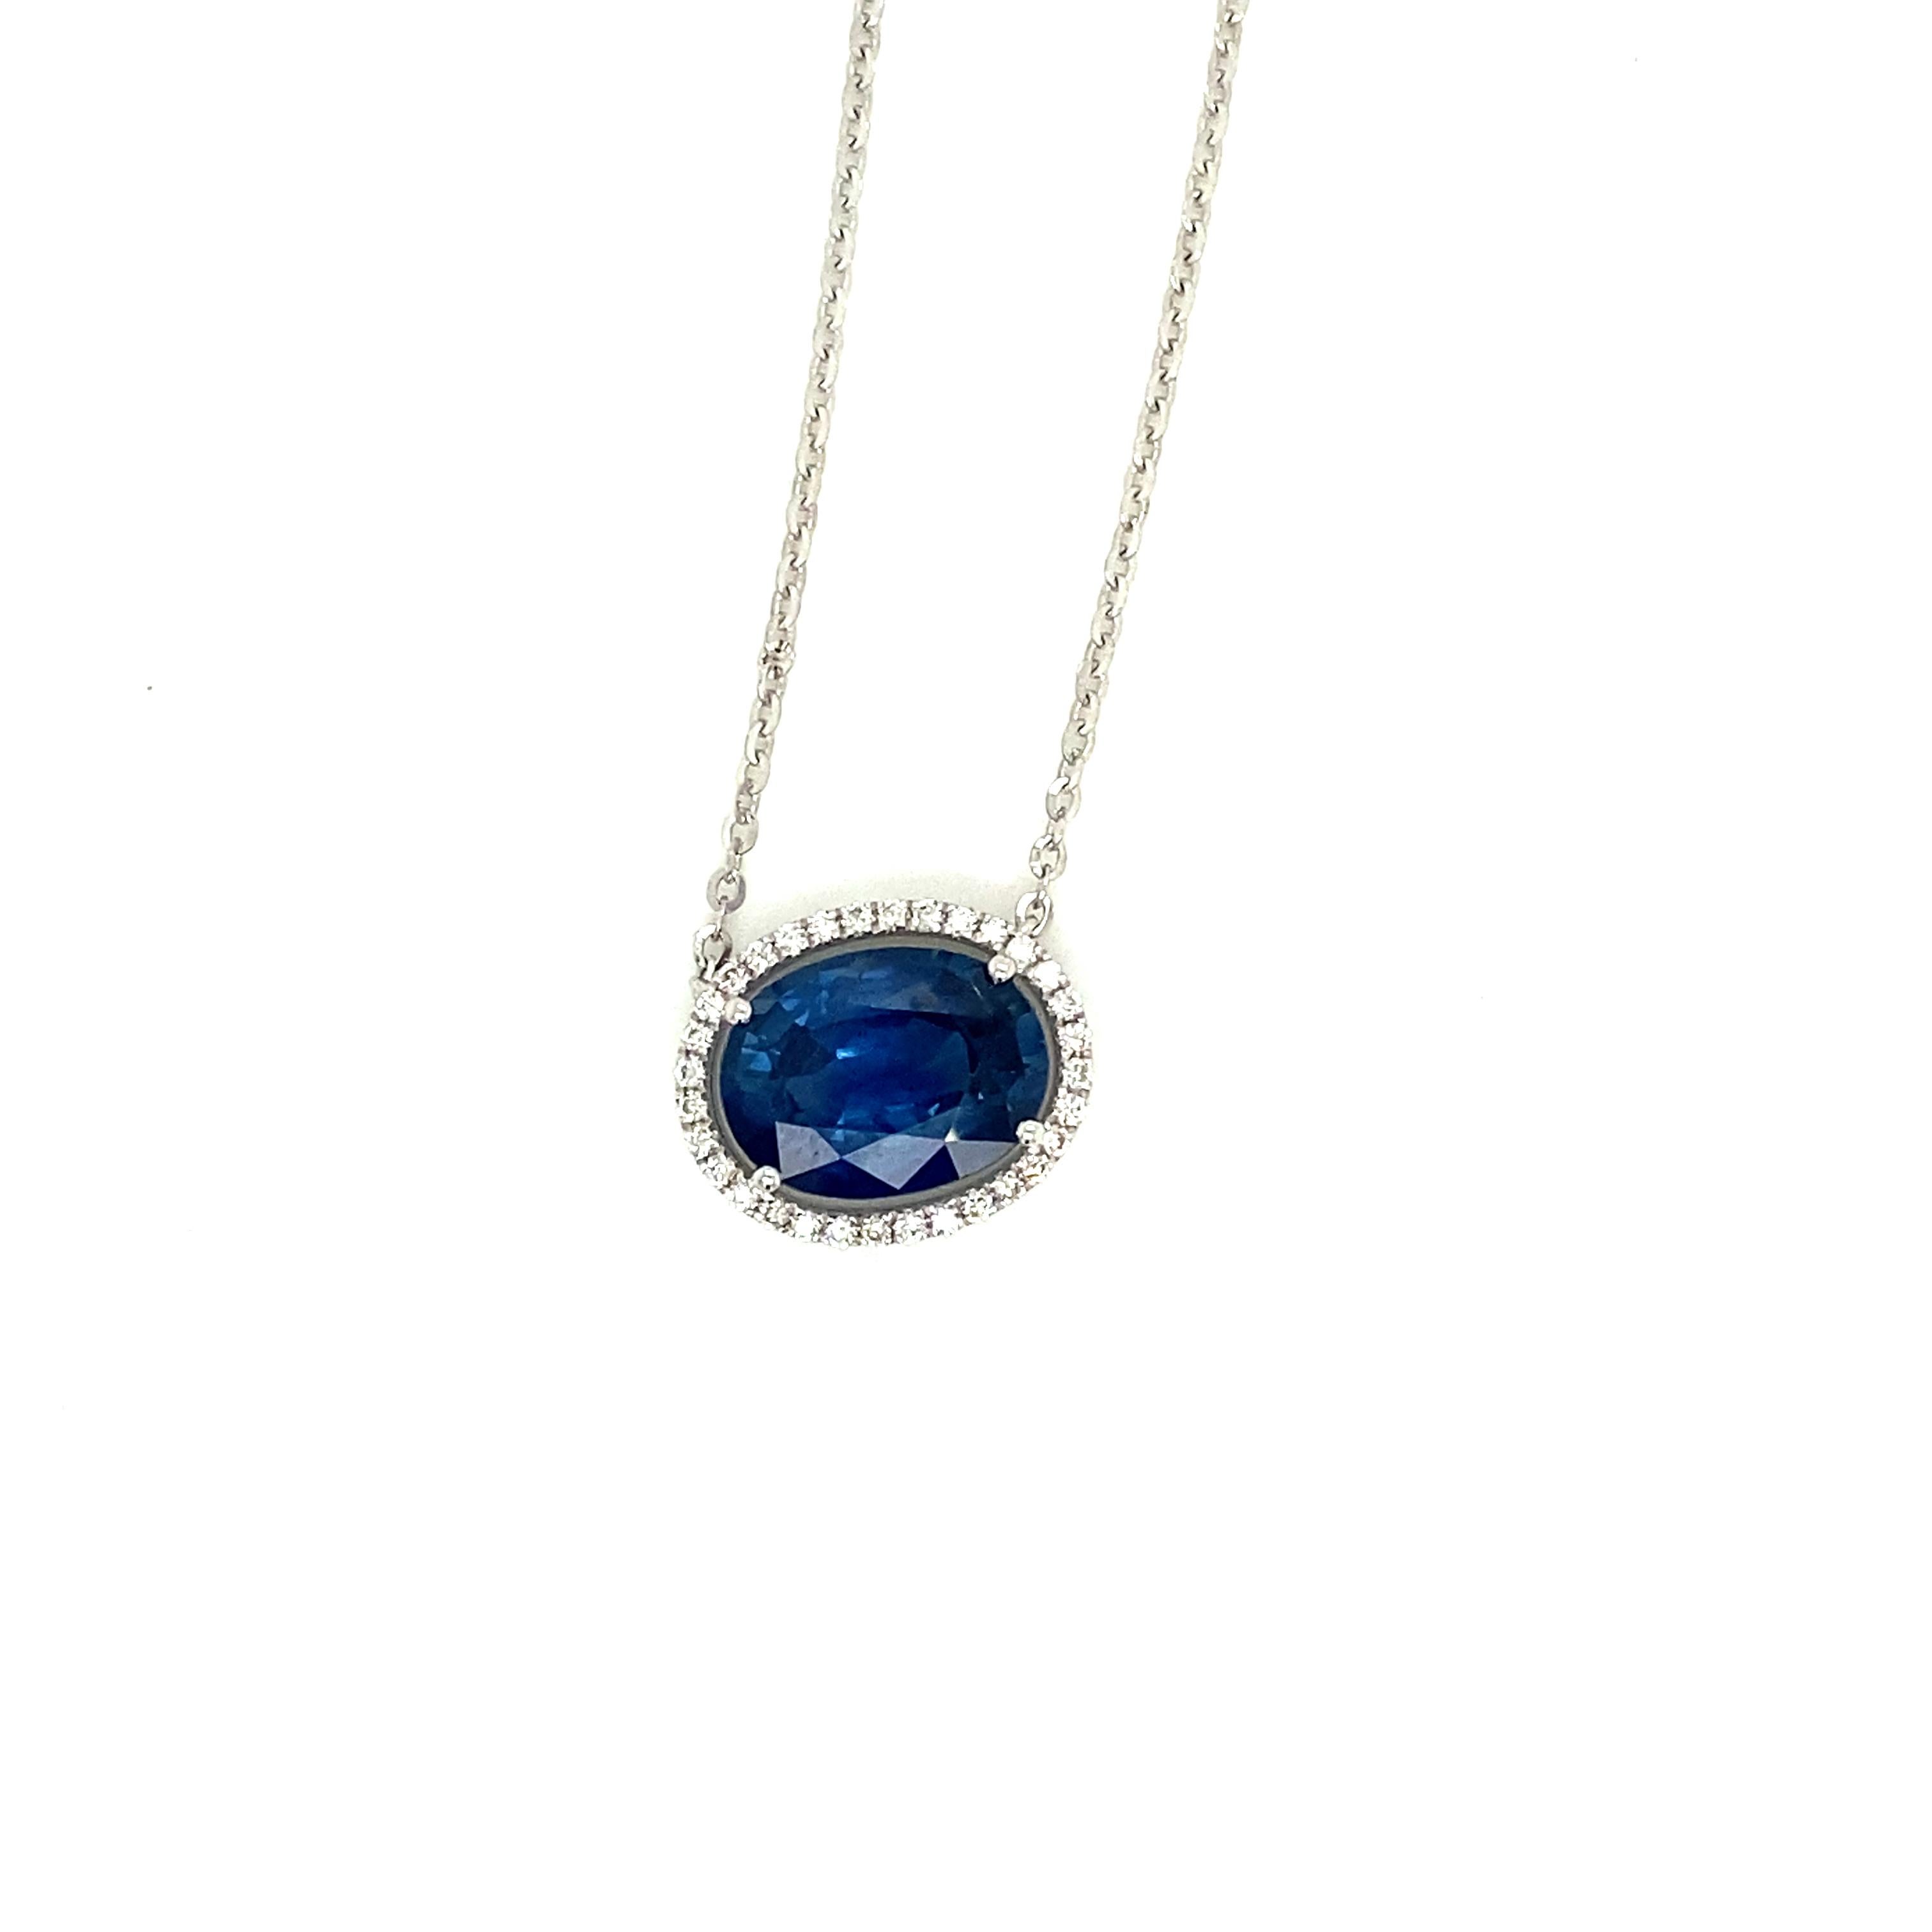 Oval Cut 4.96 Carat Oval-Cut Vivid Blue Sapphire and White Diamond Pendant Necklace For Sale